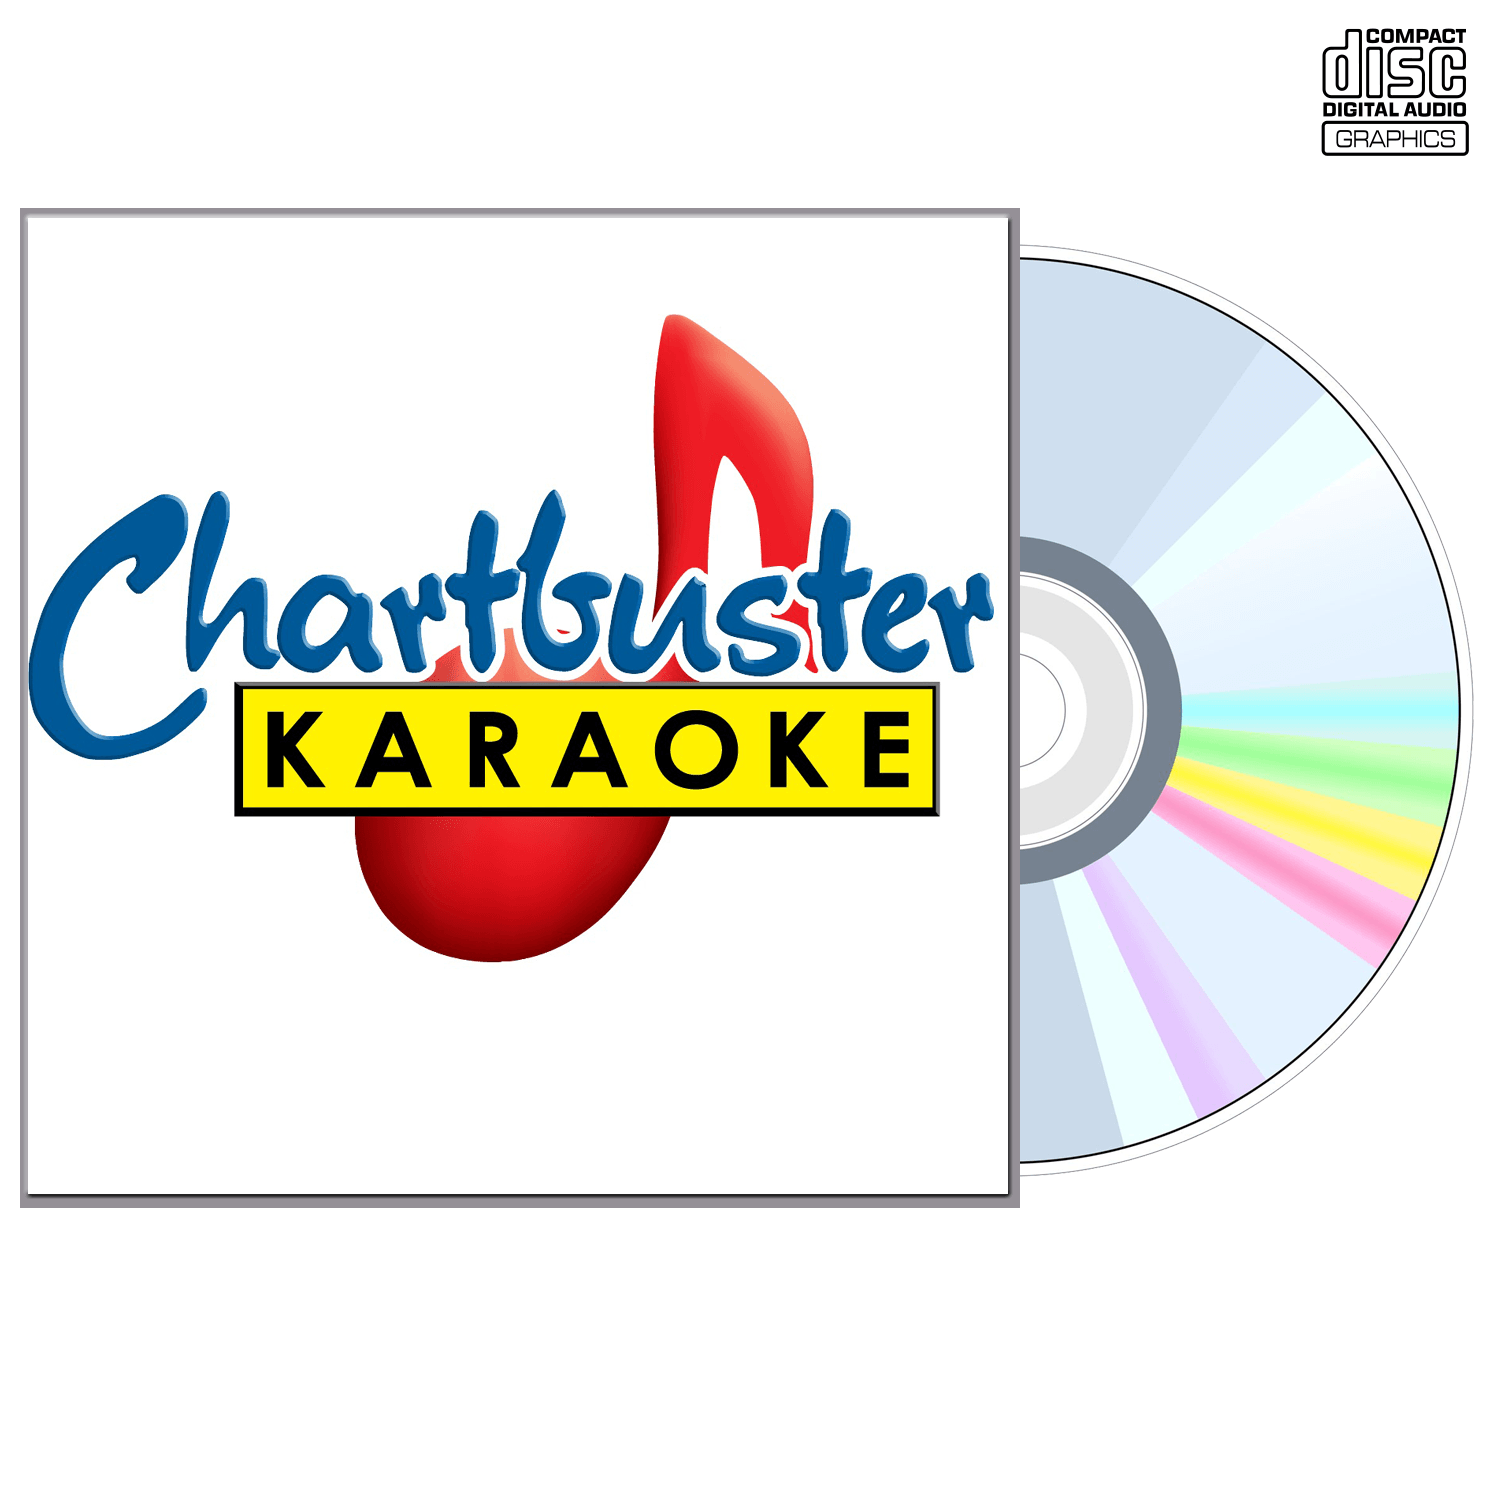 Josh Groban - CD+G - Chartbuster Karaoke - Karaoke Home Entertainment